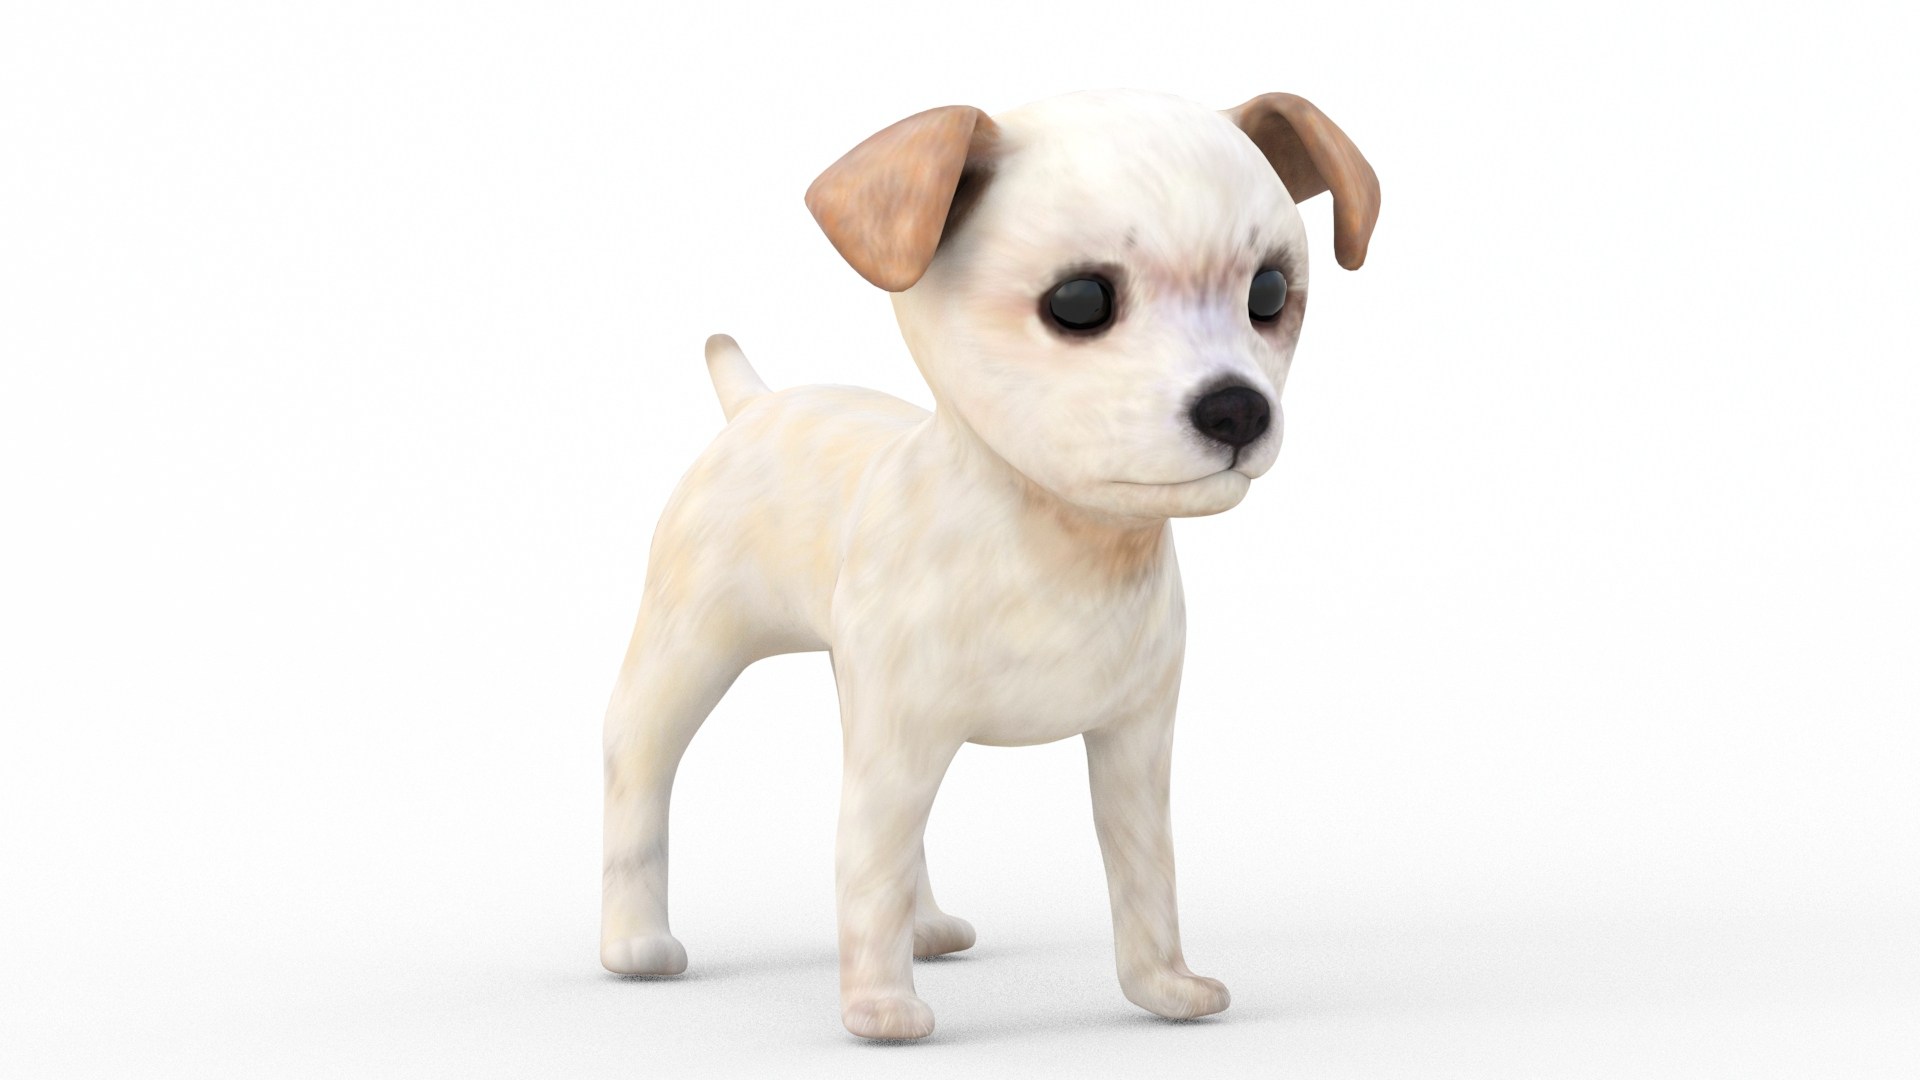 My Pet Puppy 3D - Nintendo 3DS